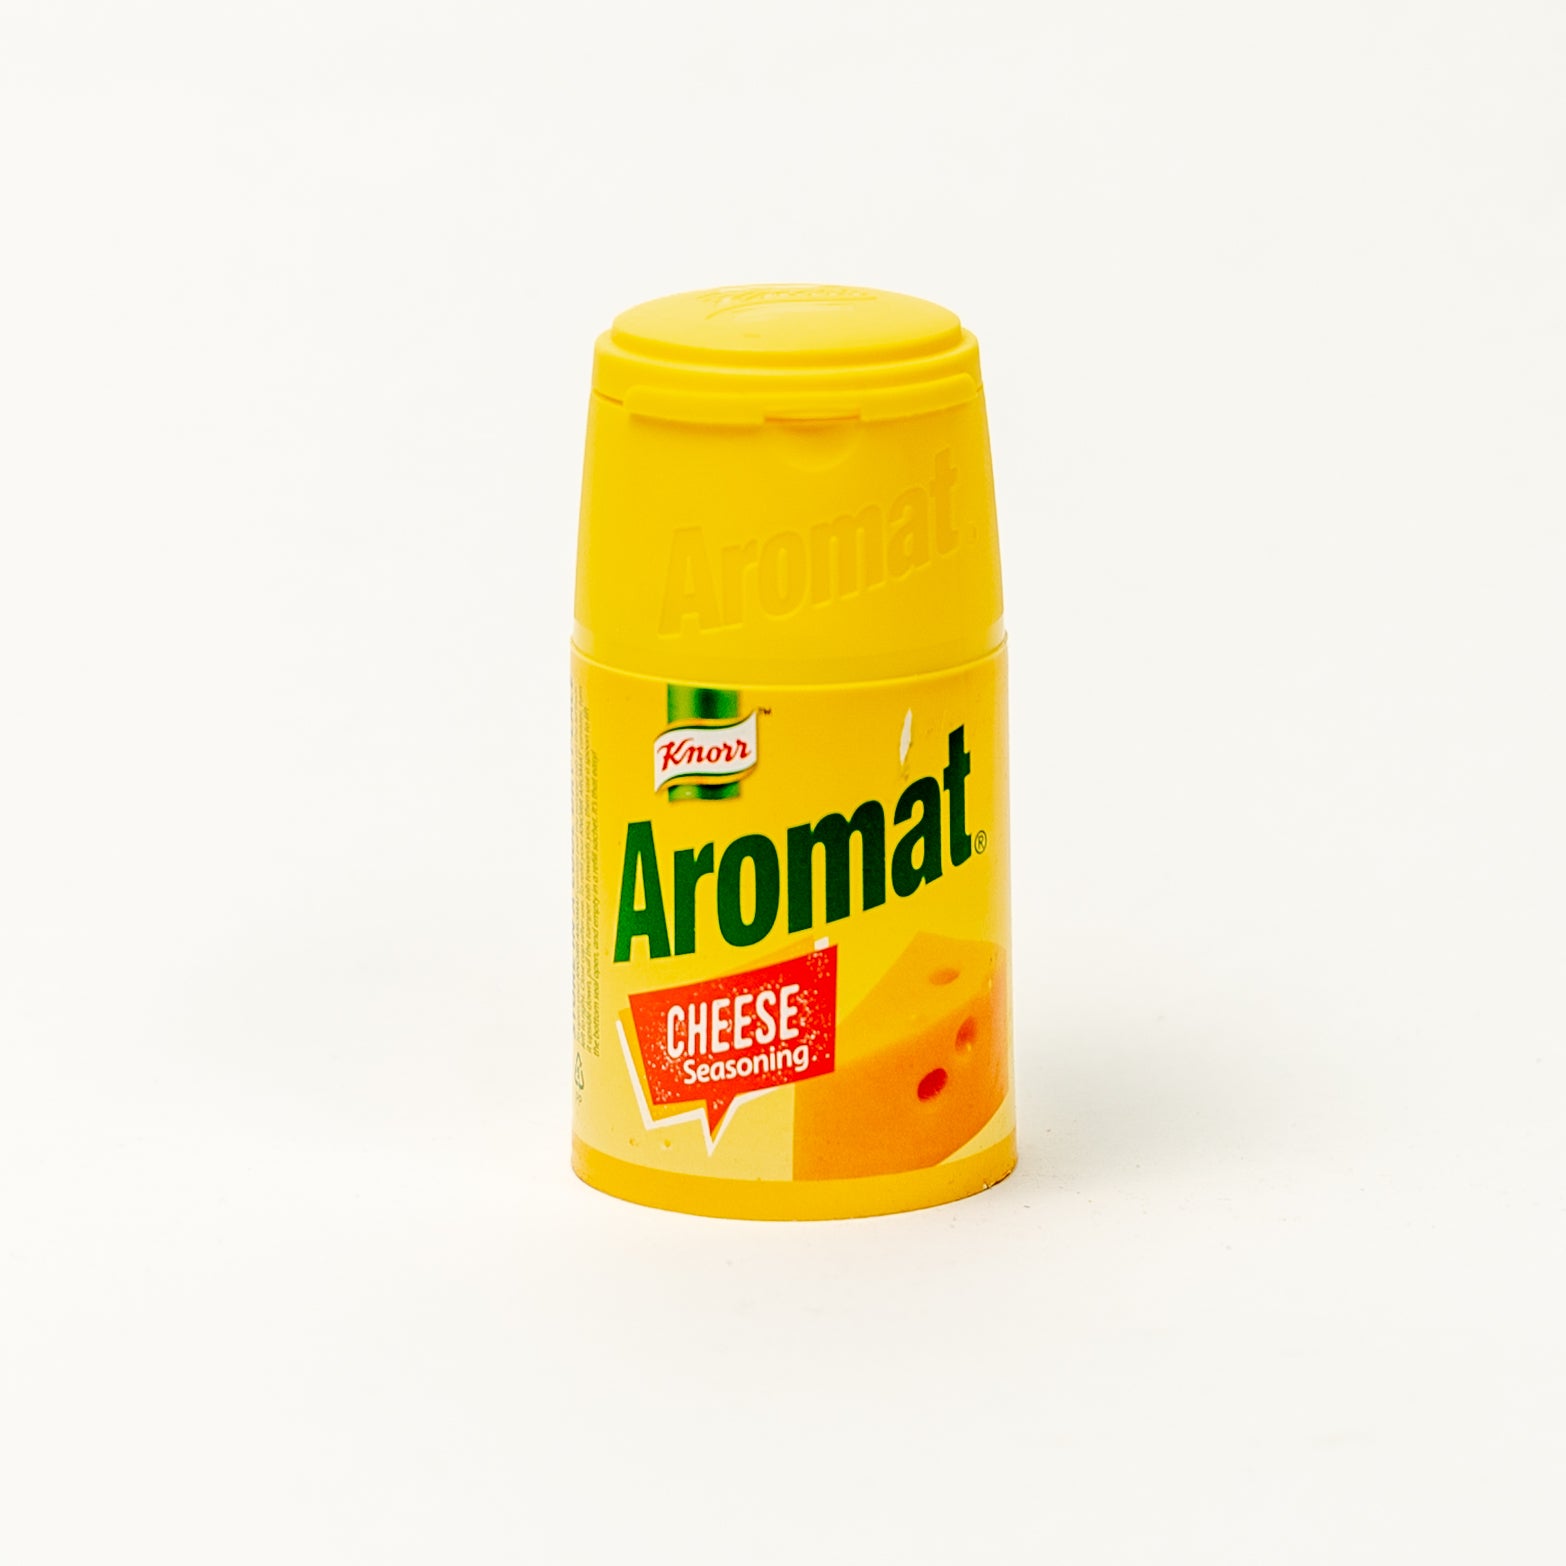 Knorr Aromat Cheese Seasoning (75g)